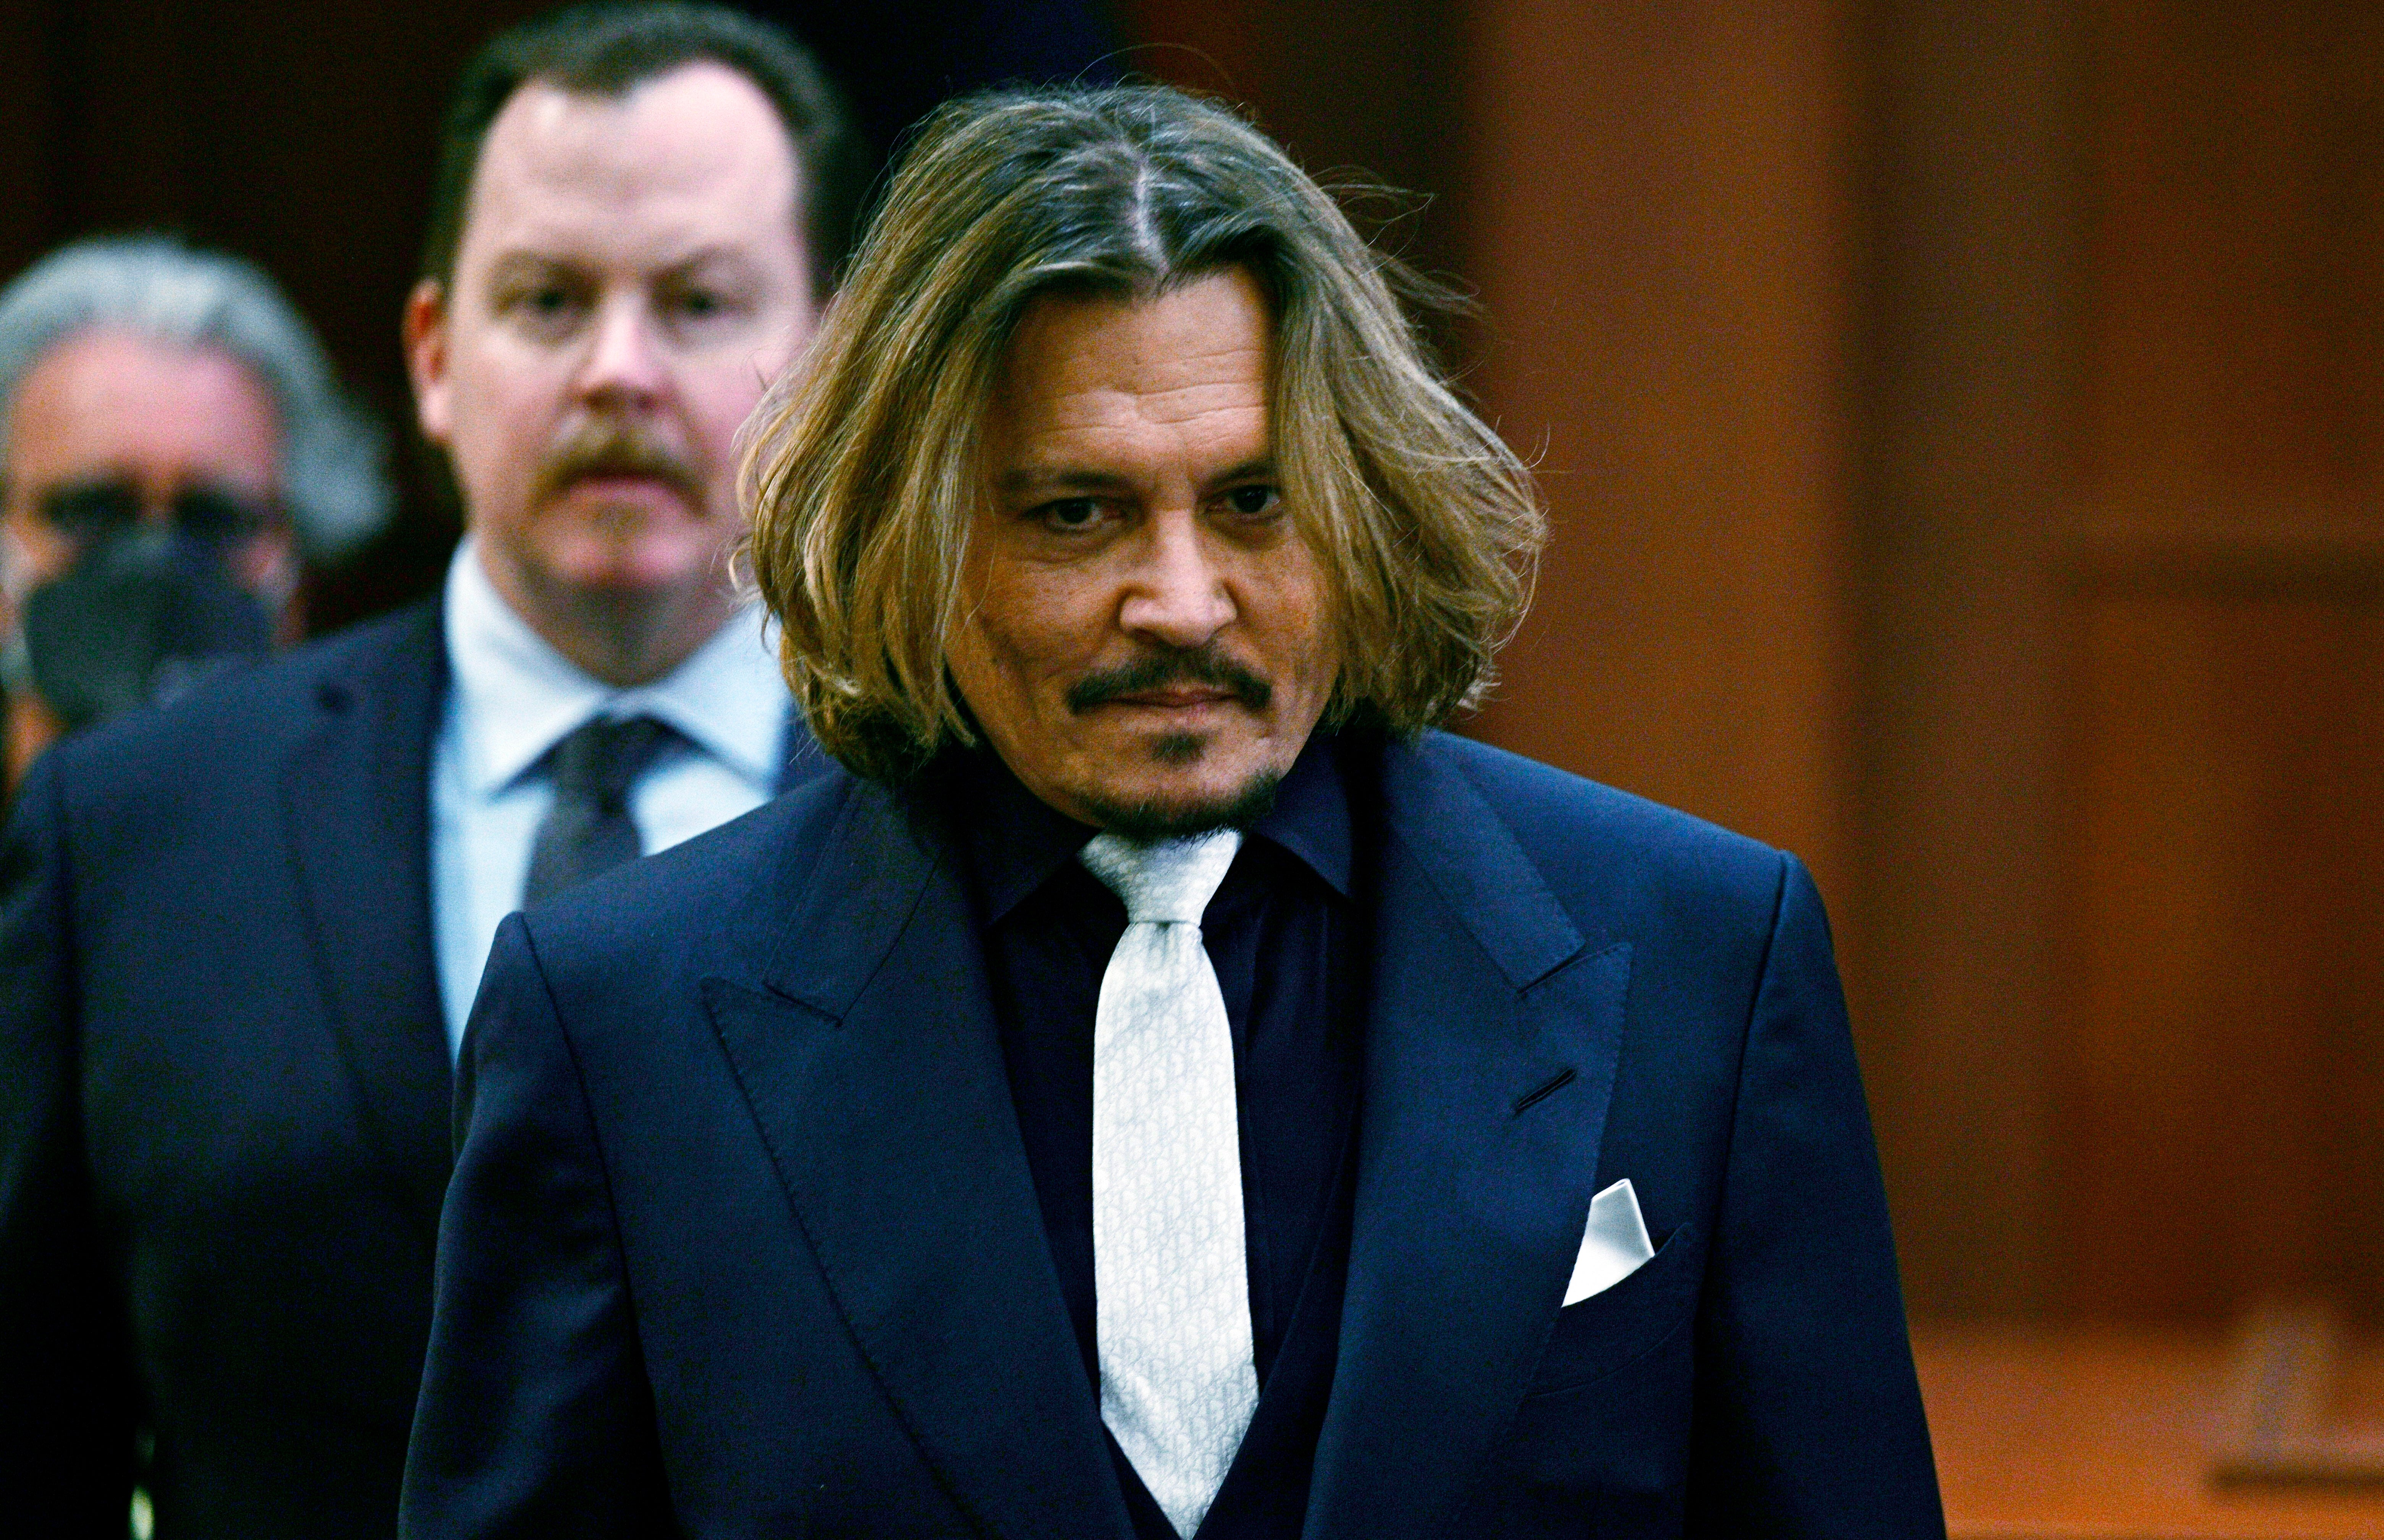 Actor Johnny Depp walks into the courtroom at the Fairfax County Circuit Court in Fairfax, Virginia (Brendan Smialowski, Pool via AP)